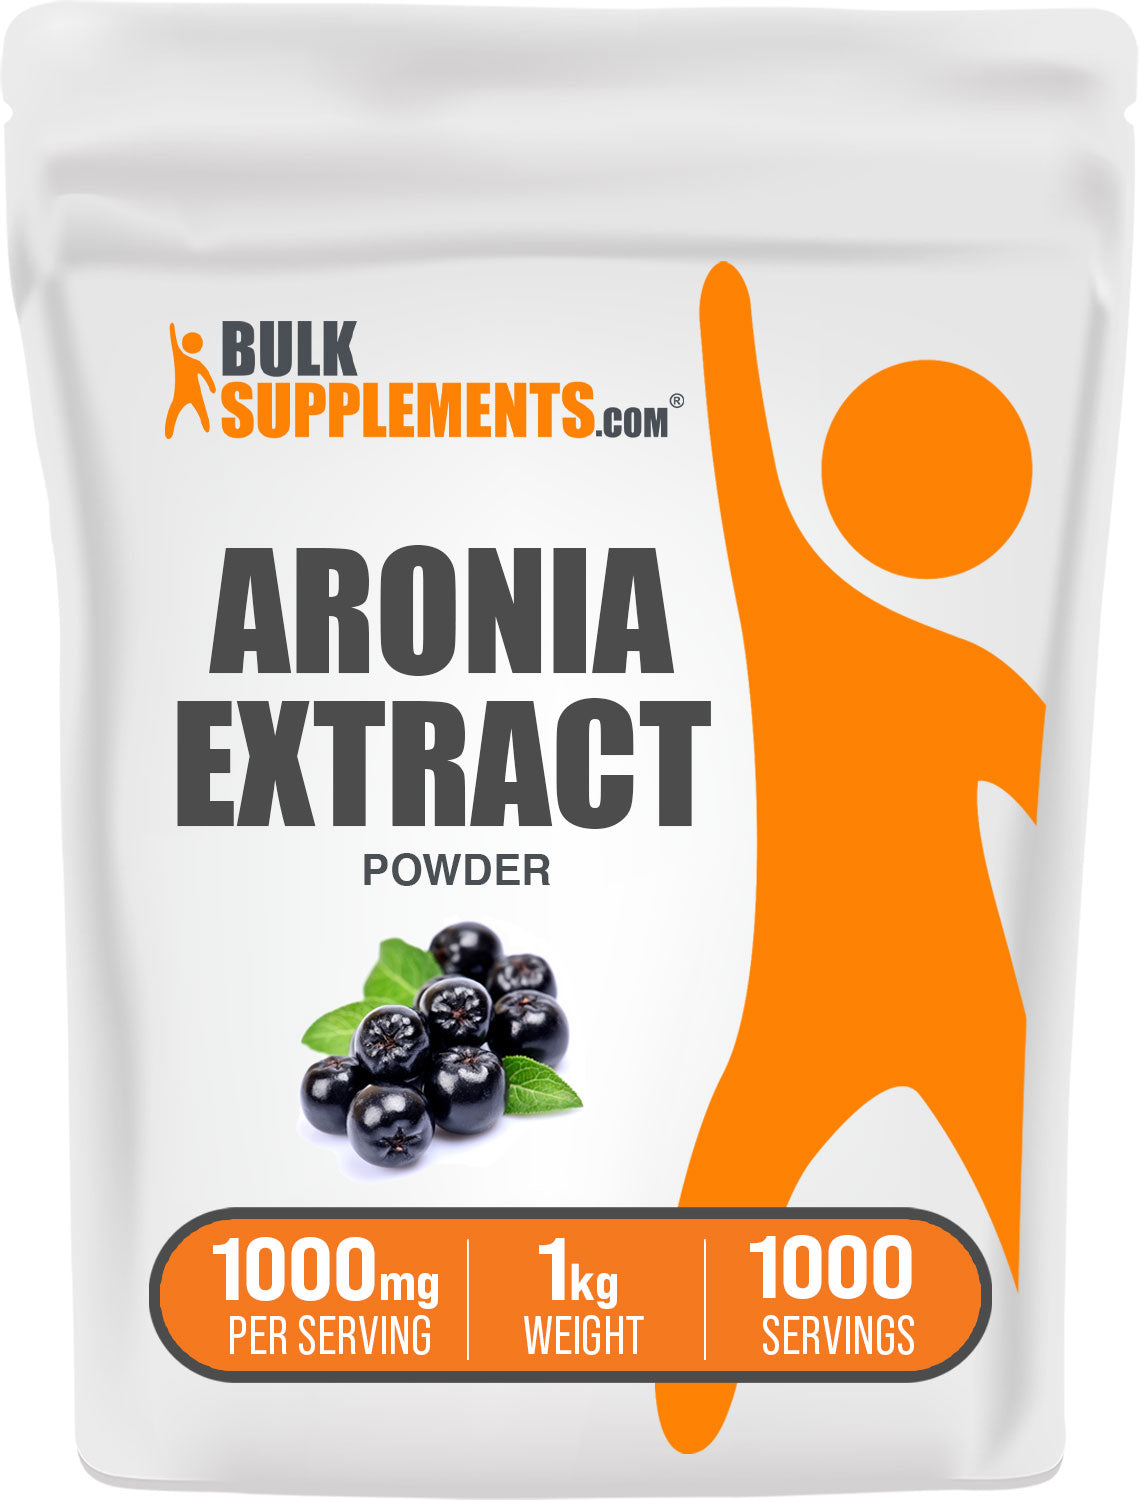 antioxidants supplement	